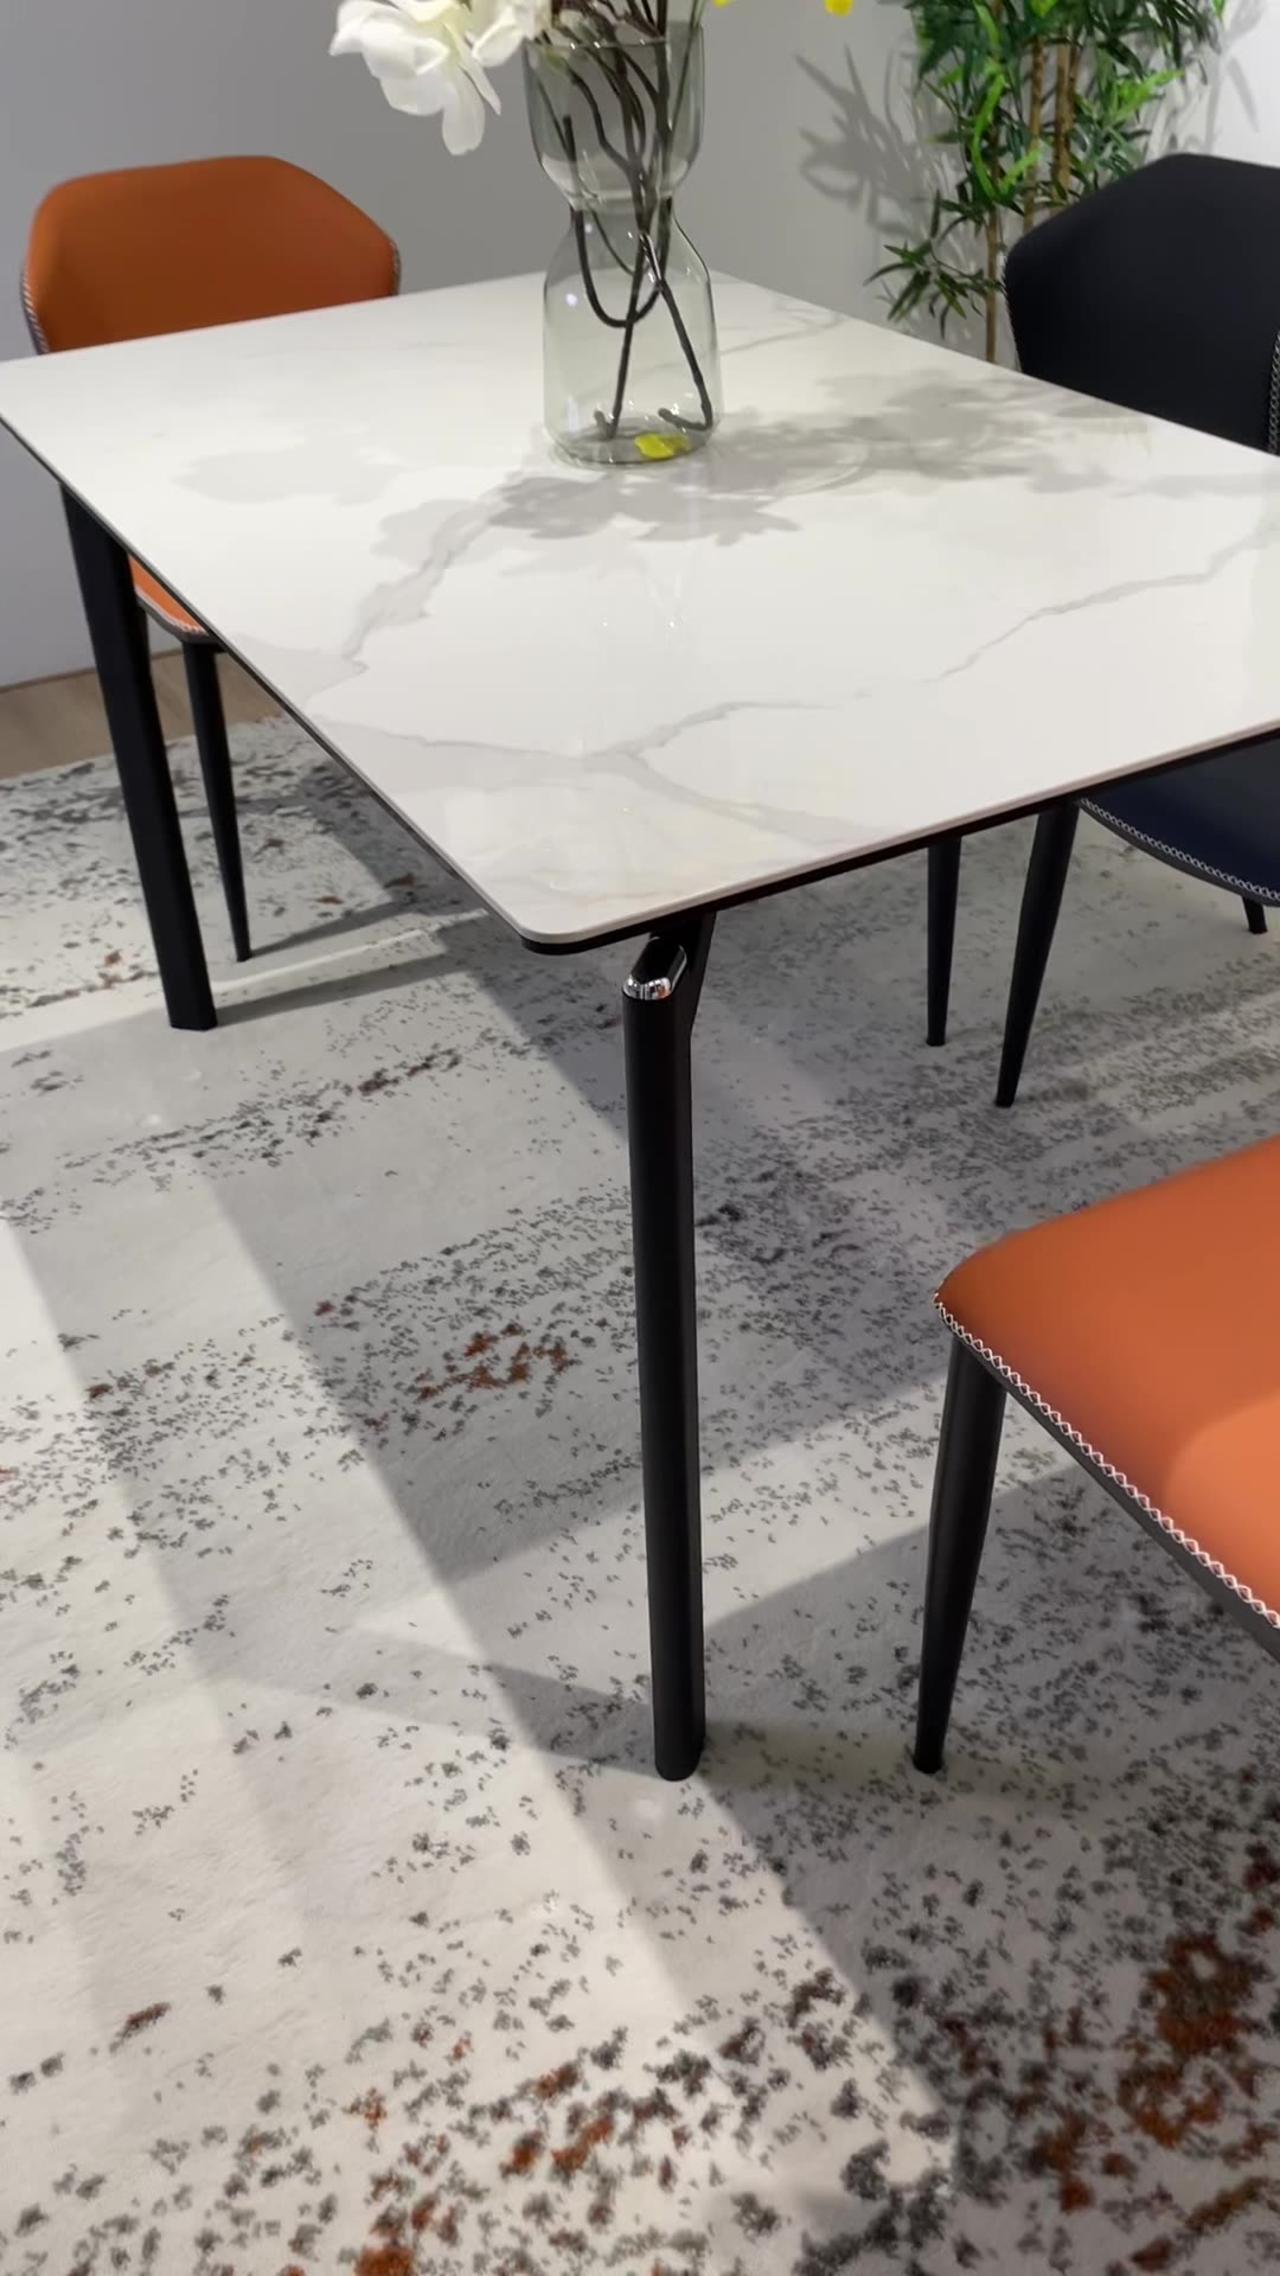 Sleek Sintered Stone Dining Table + Elegant Iron Design!